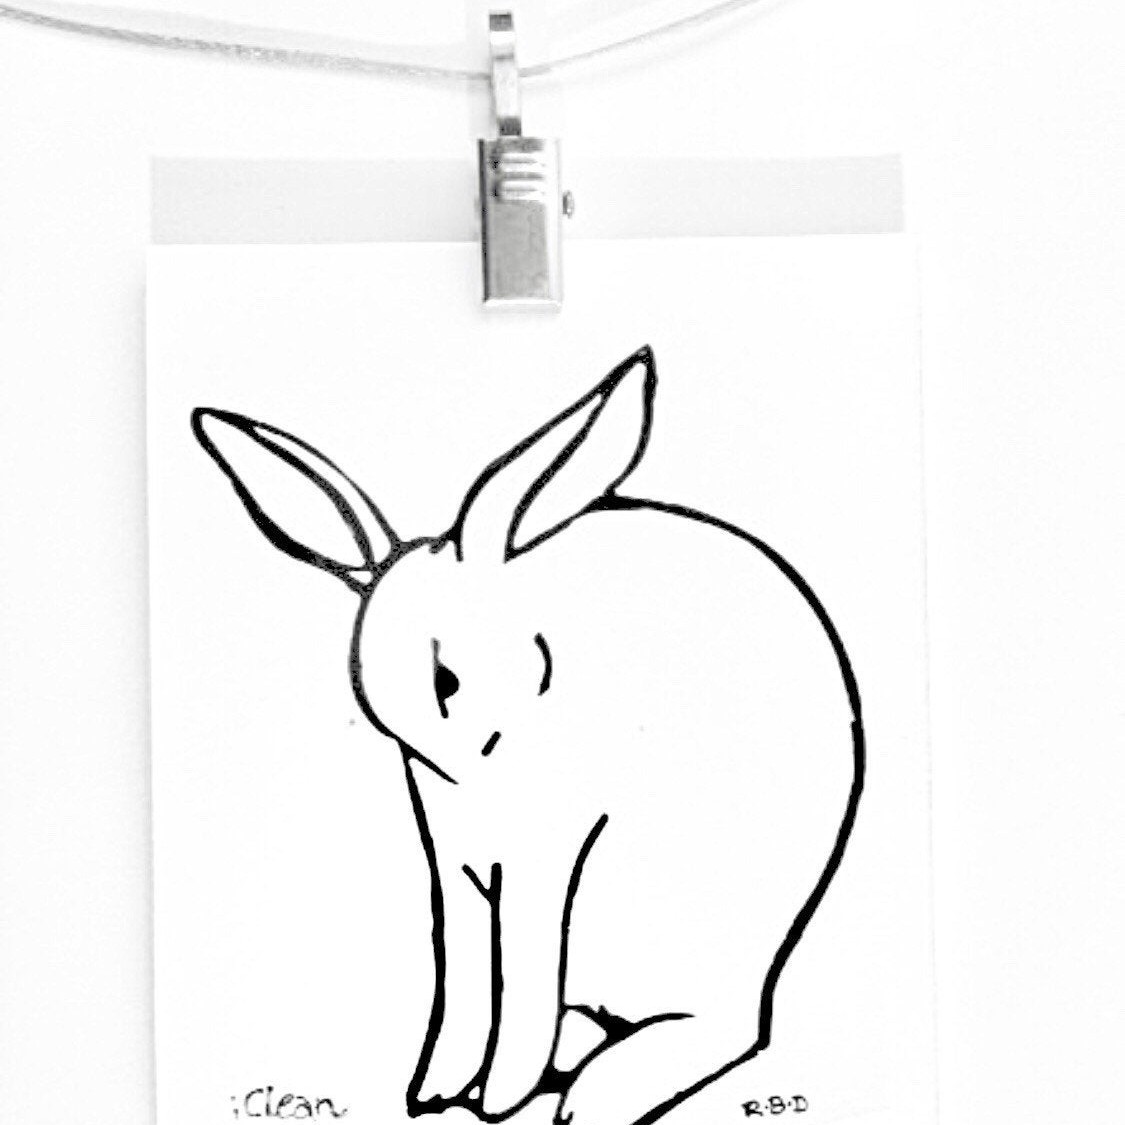 Rabbit Drawing - Printed onto White Card